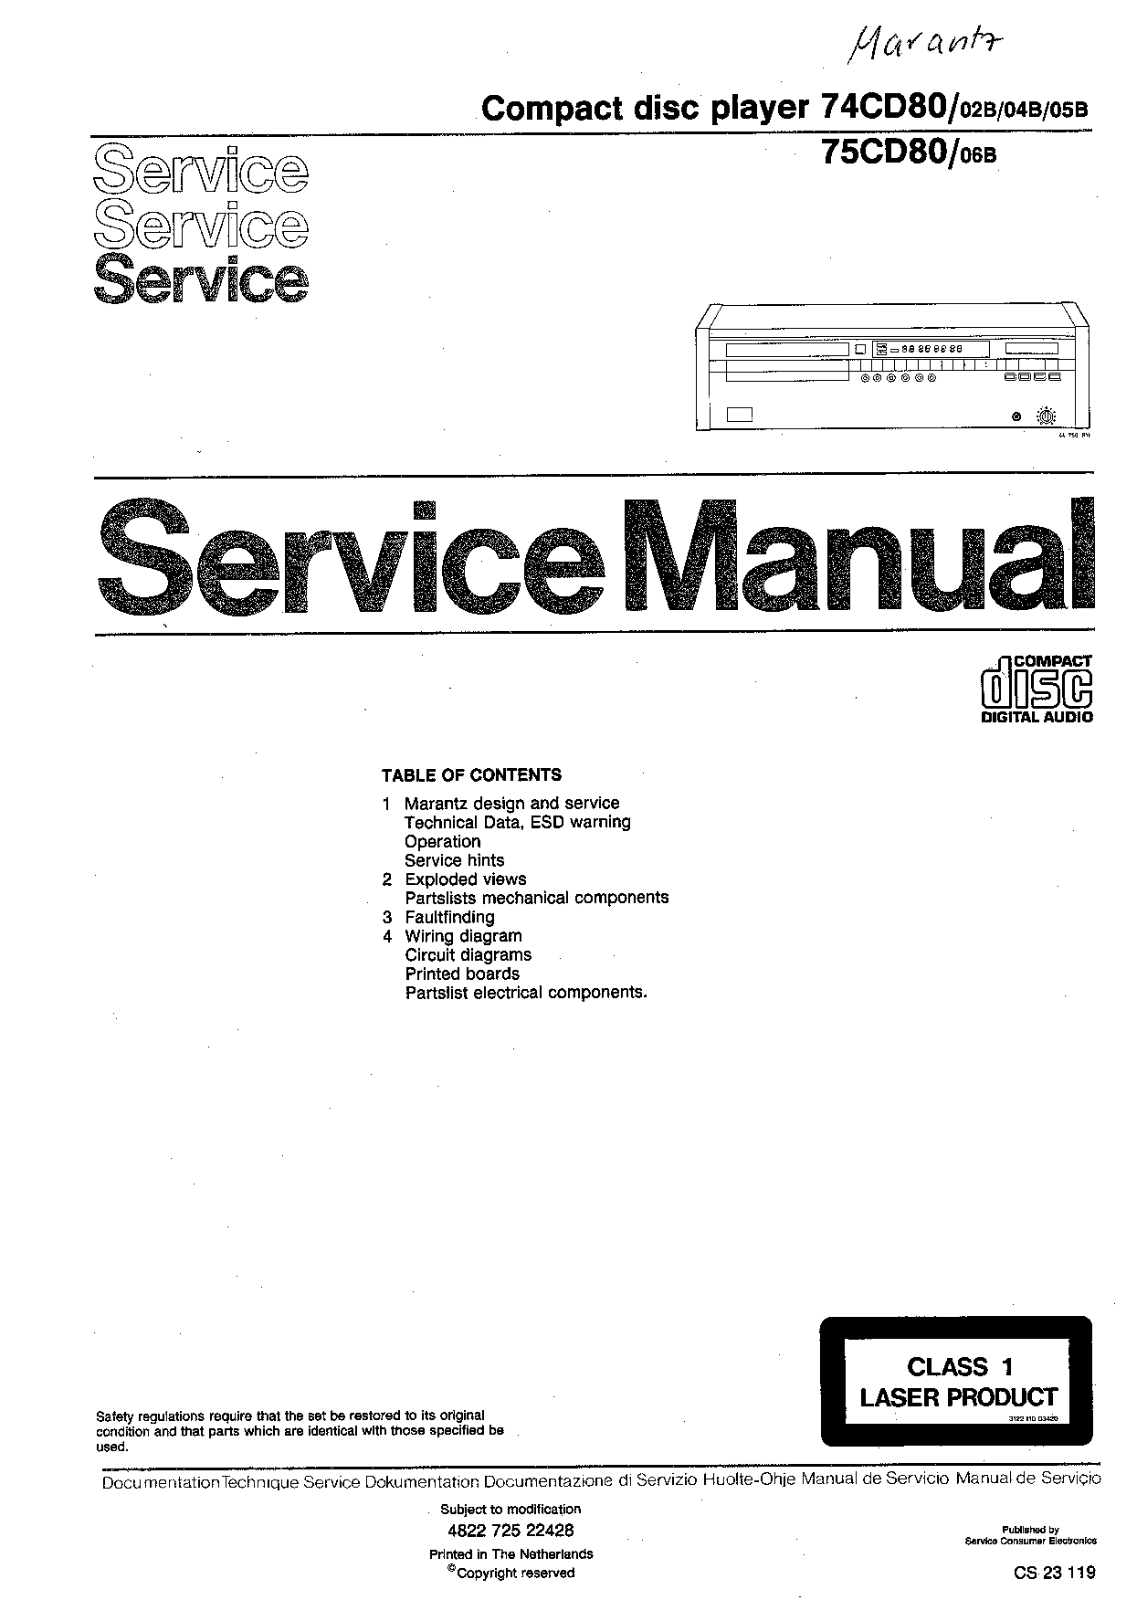 Marantz 74CD80 Service manual